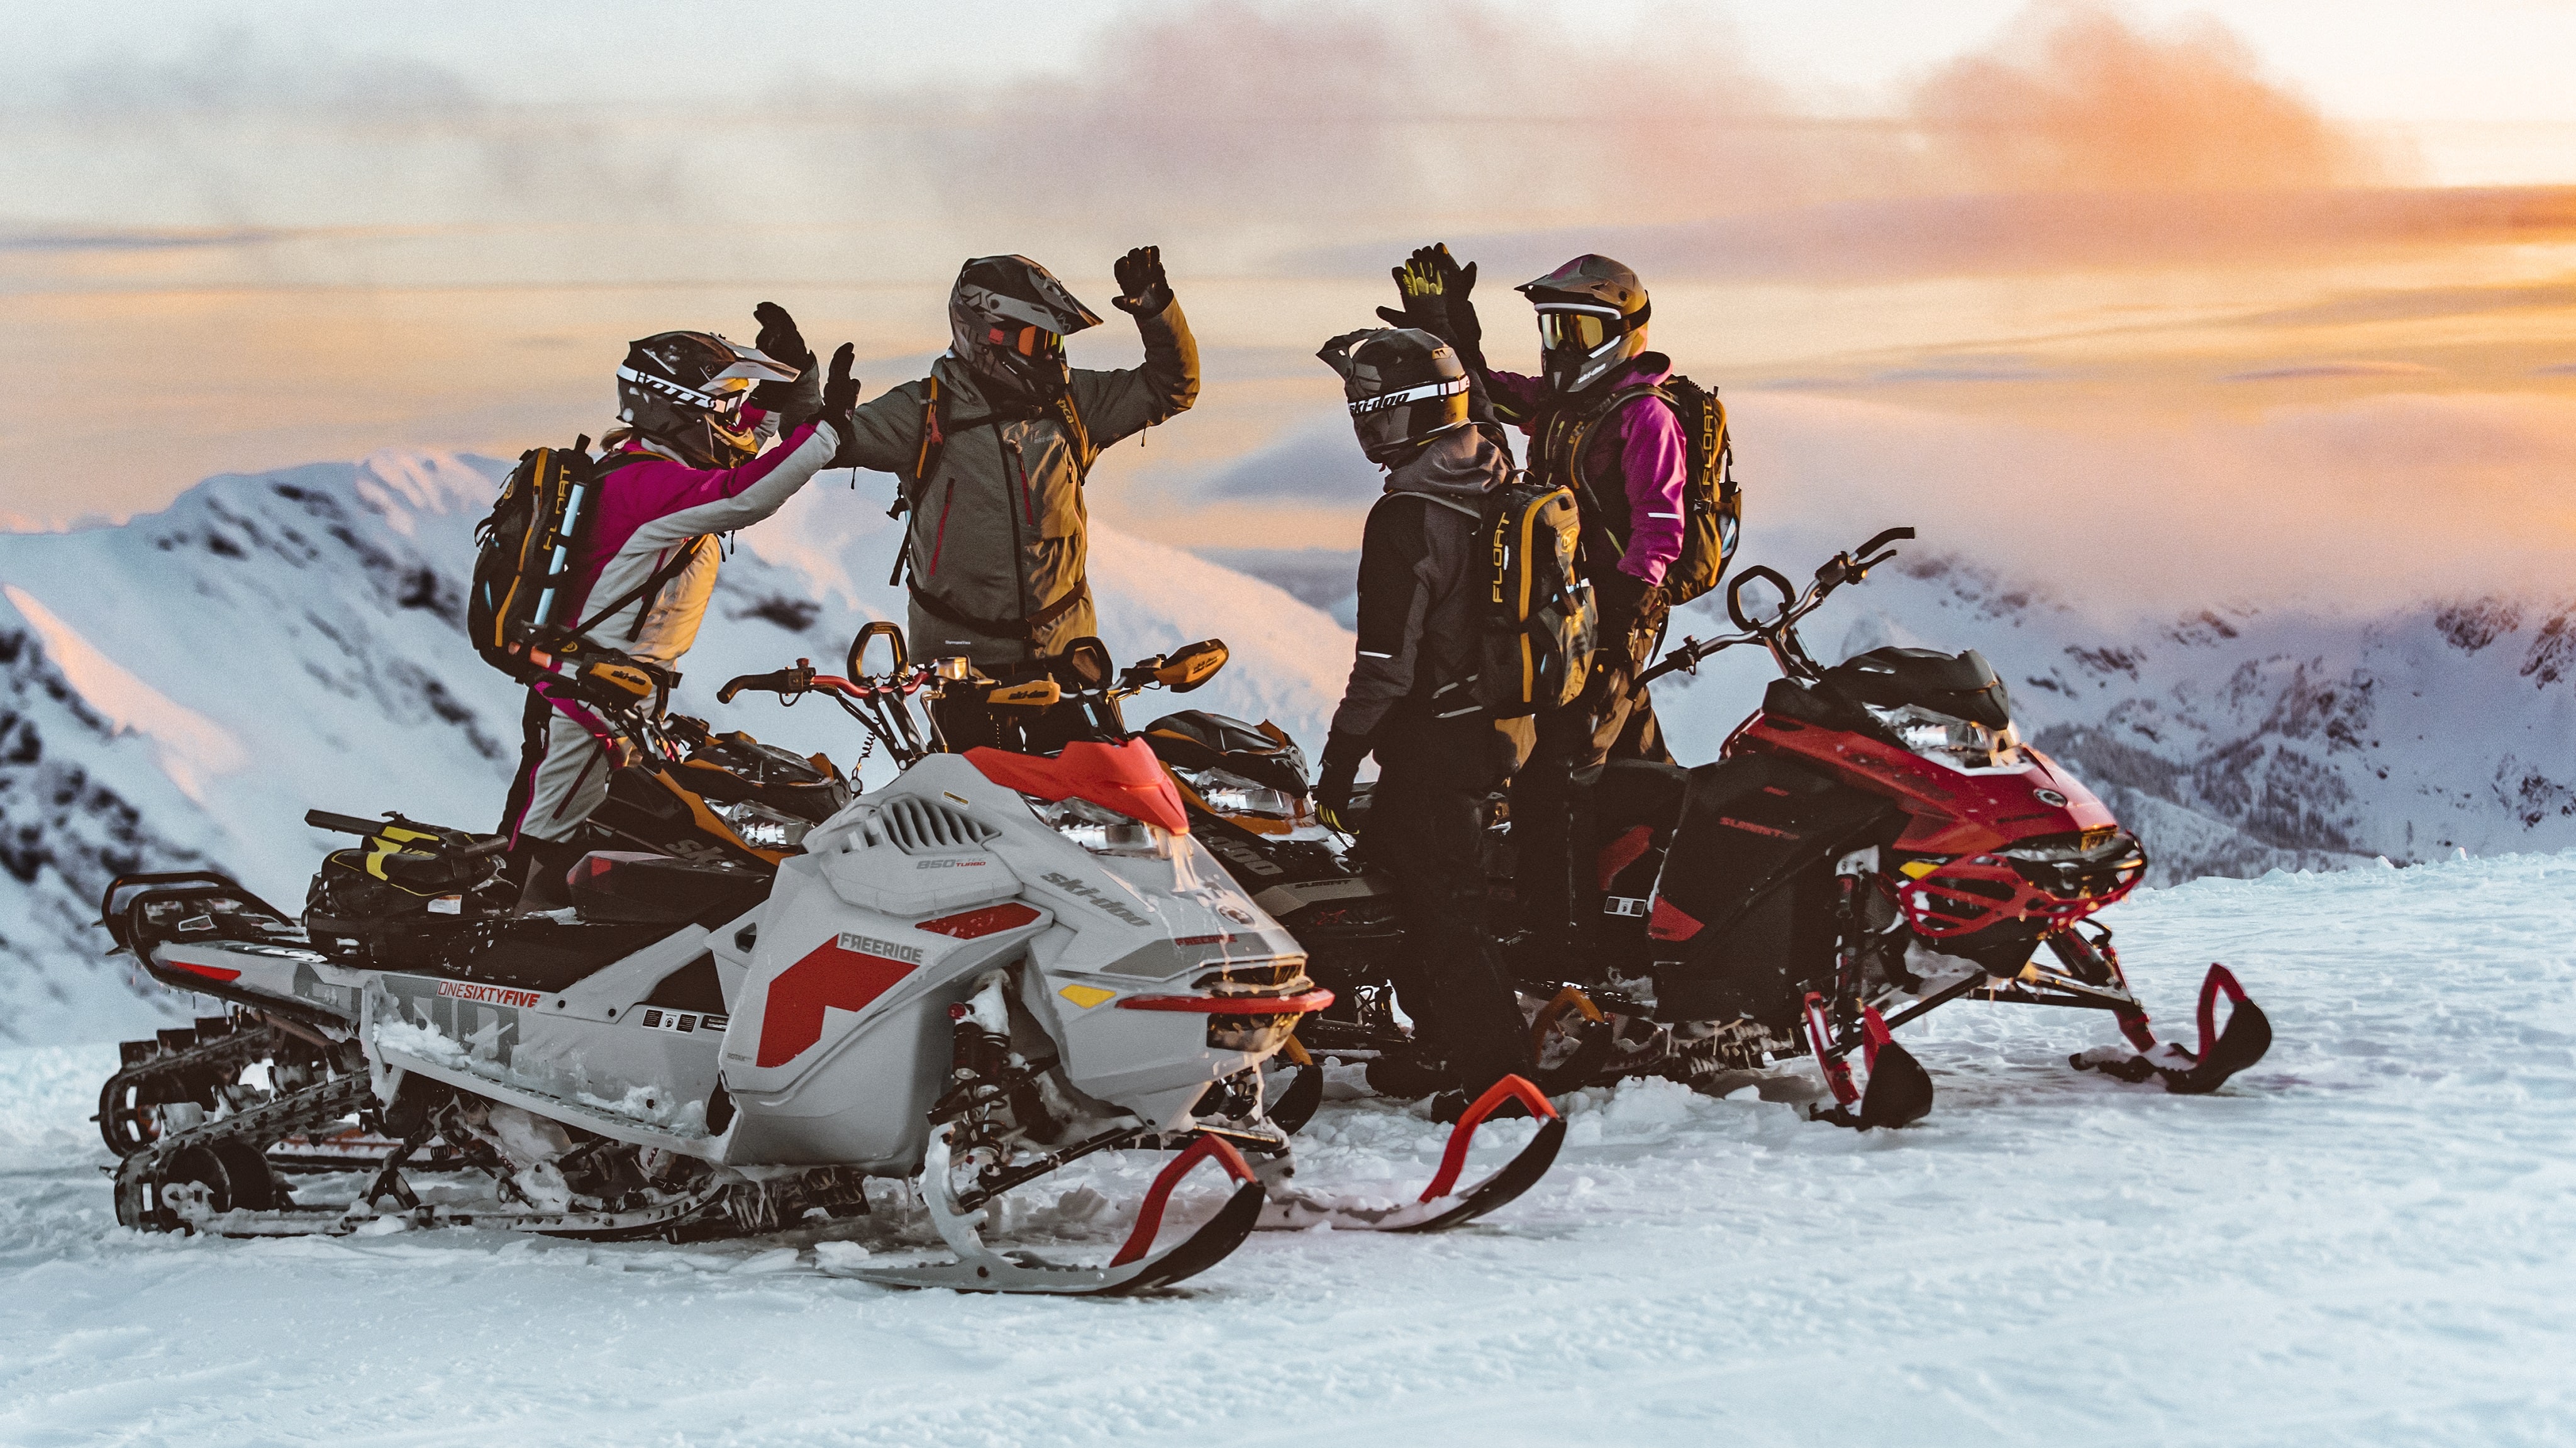 Four friends high fiving near the Ski-doo snowmobiles